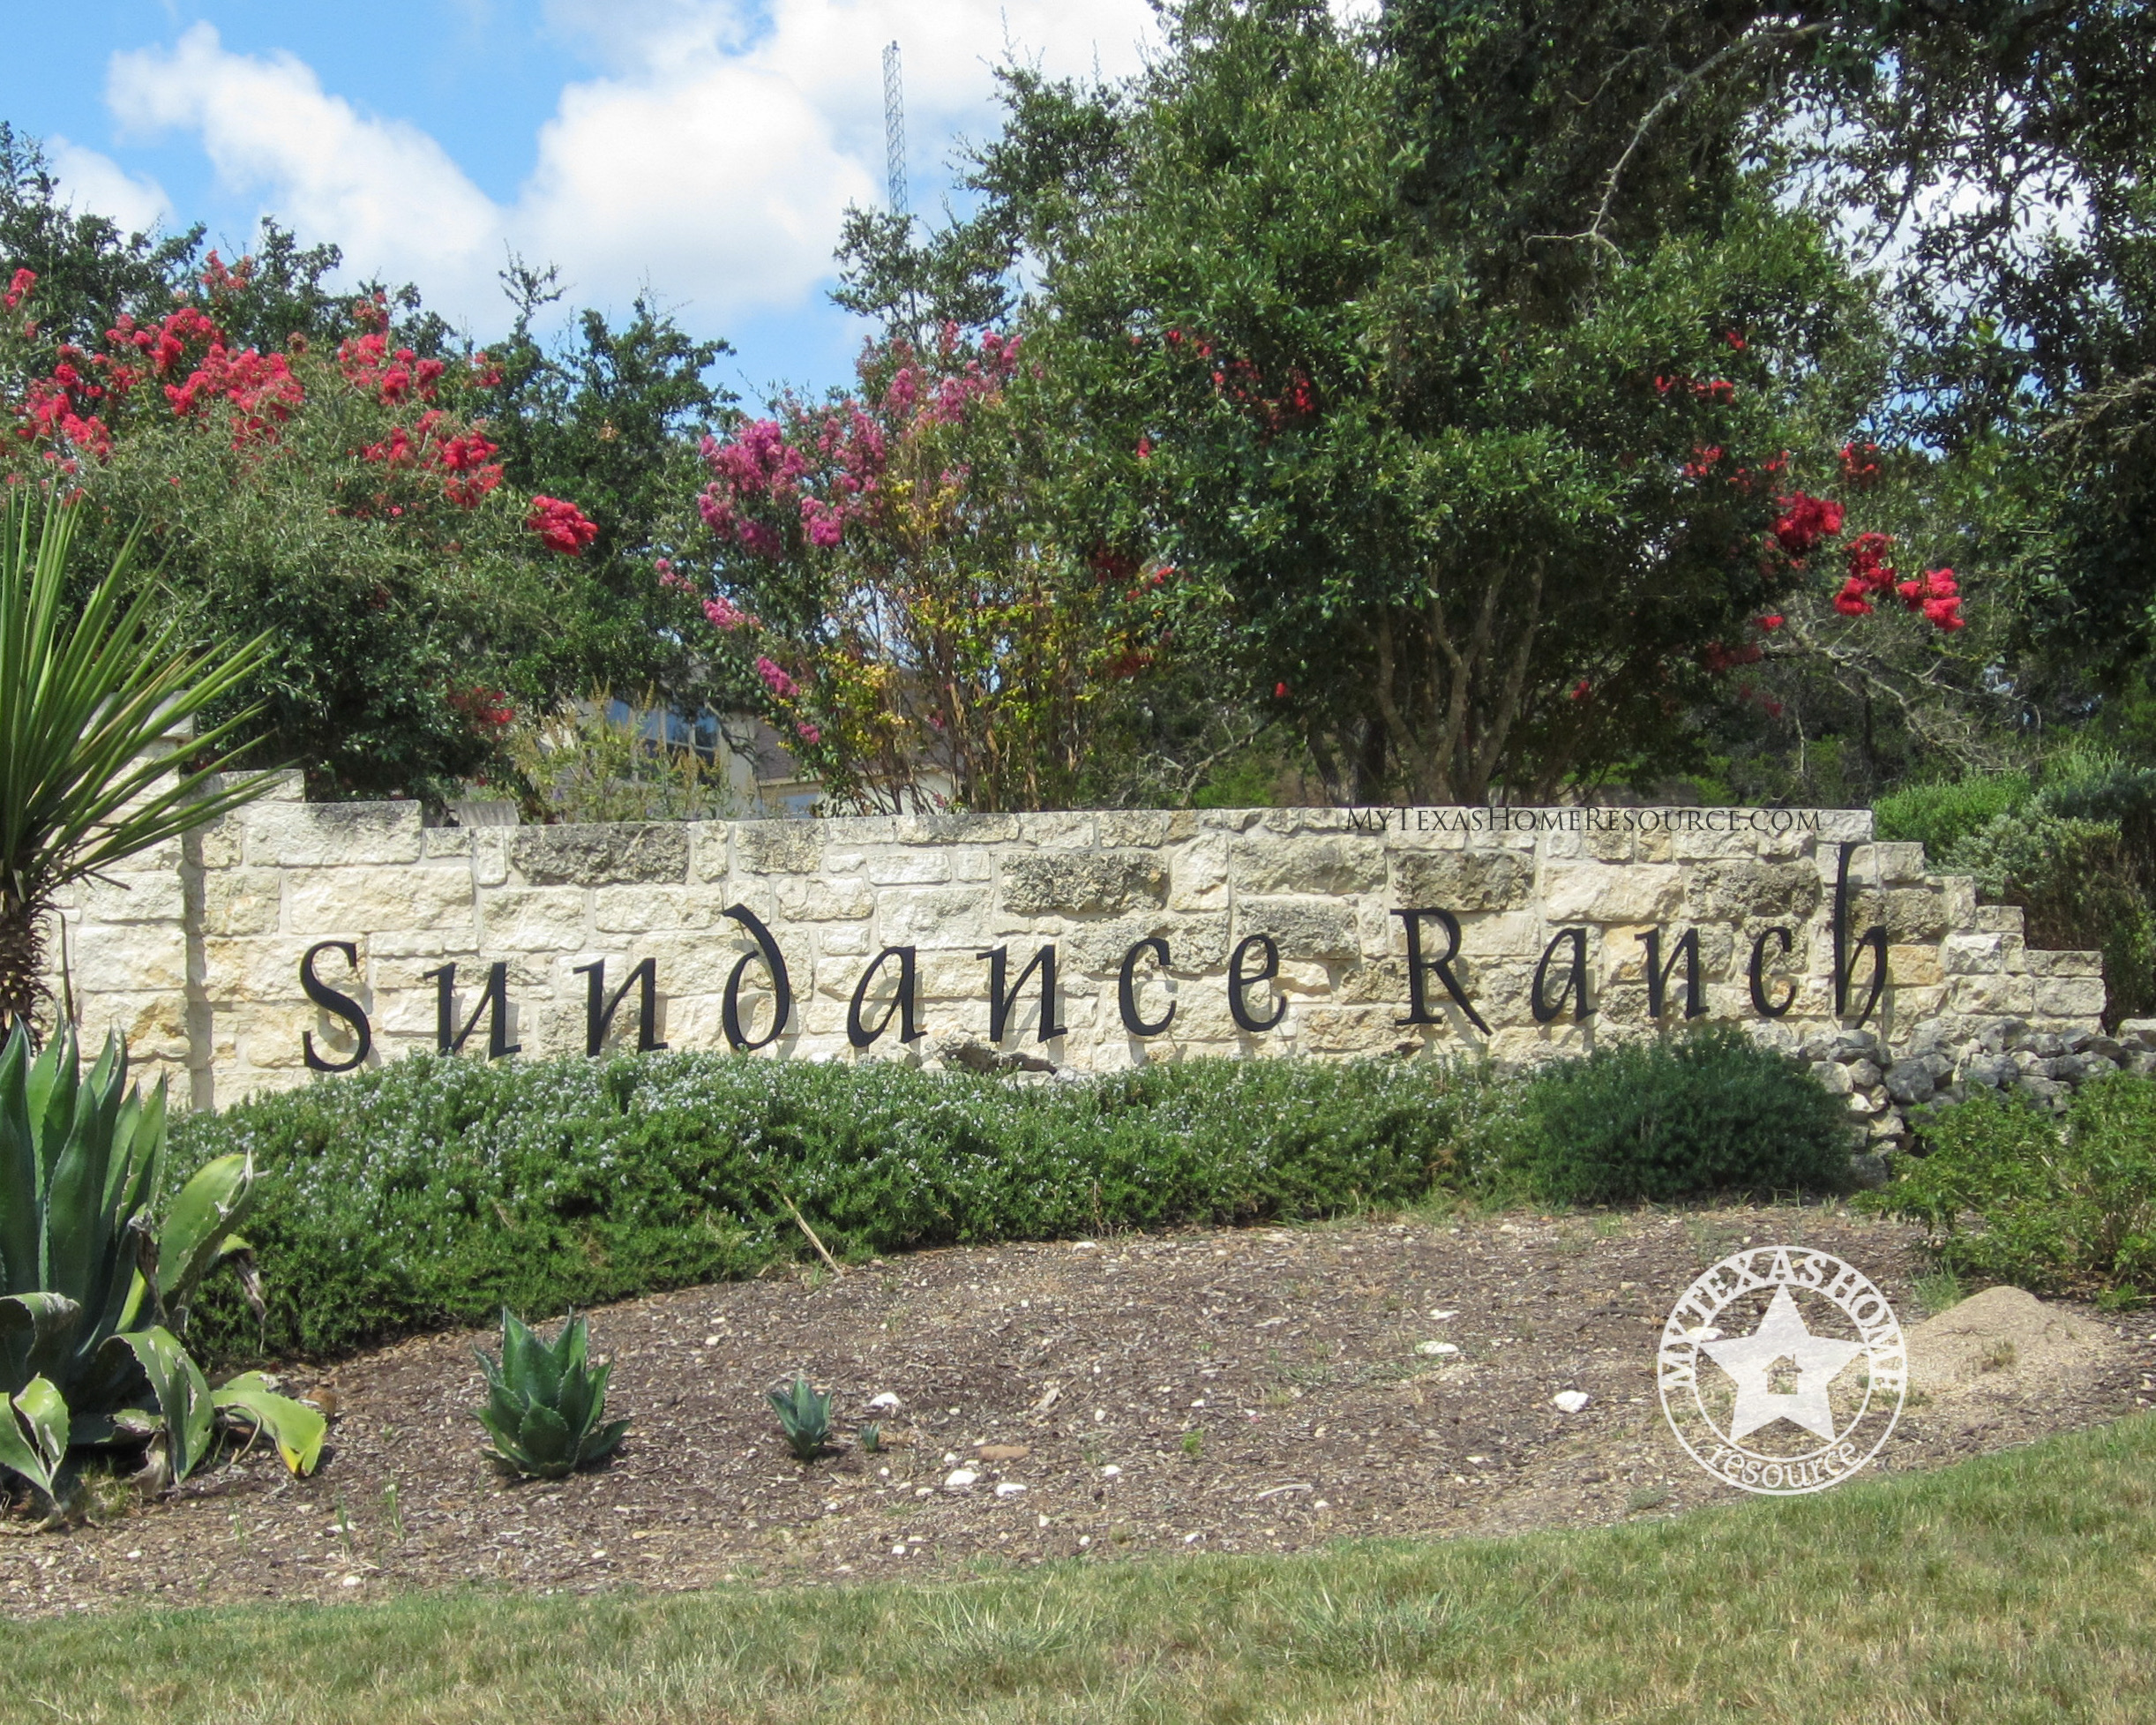 Sundance Ranch Community San Antonio, TX